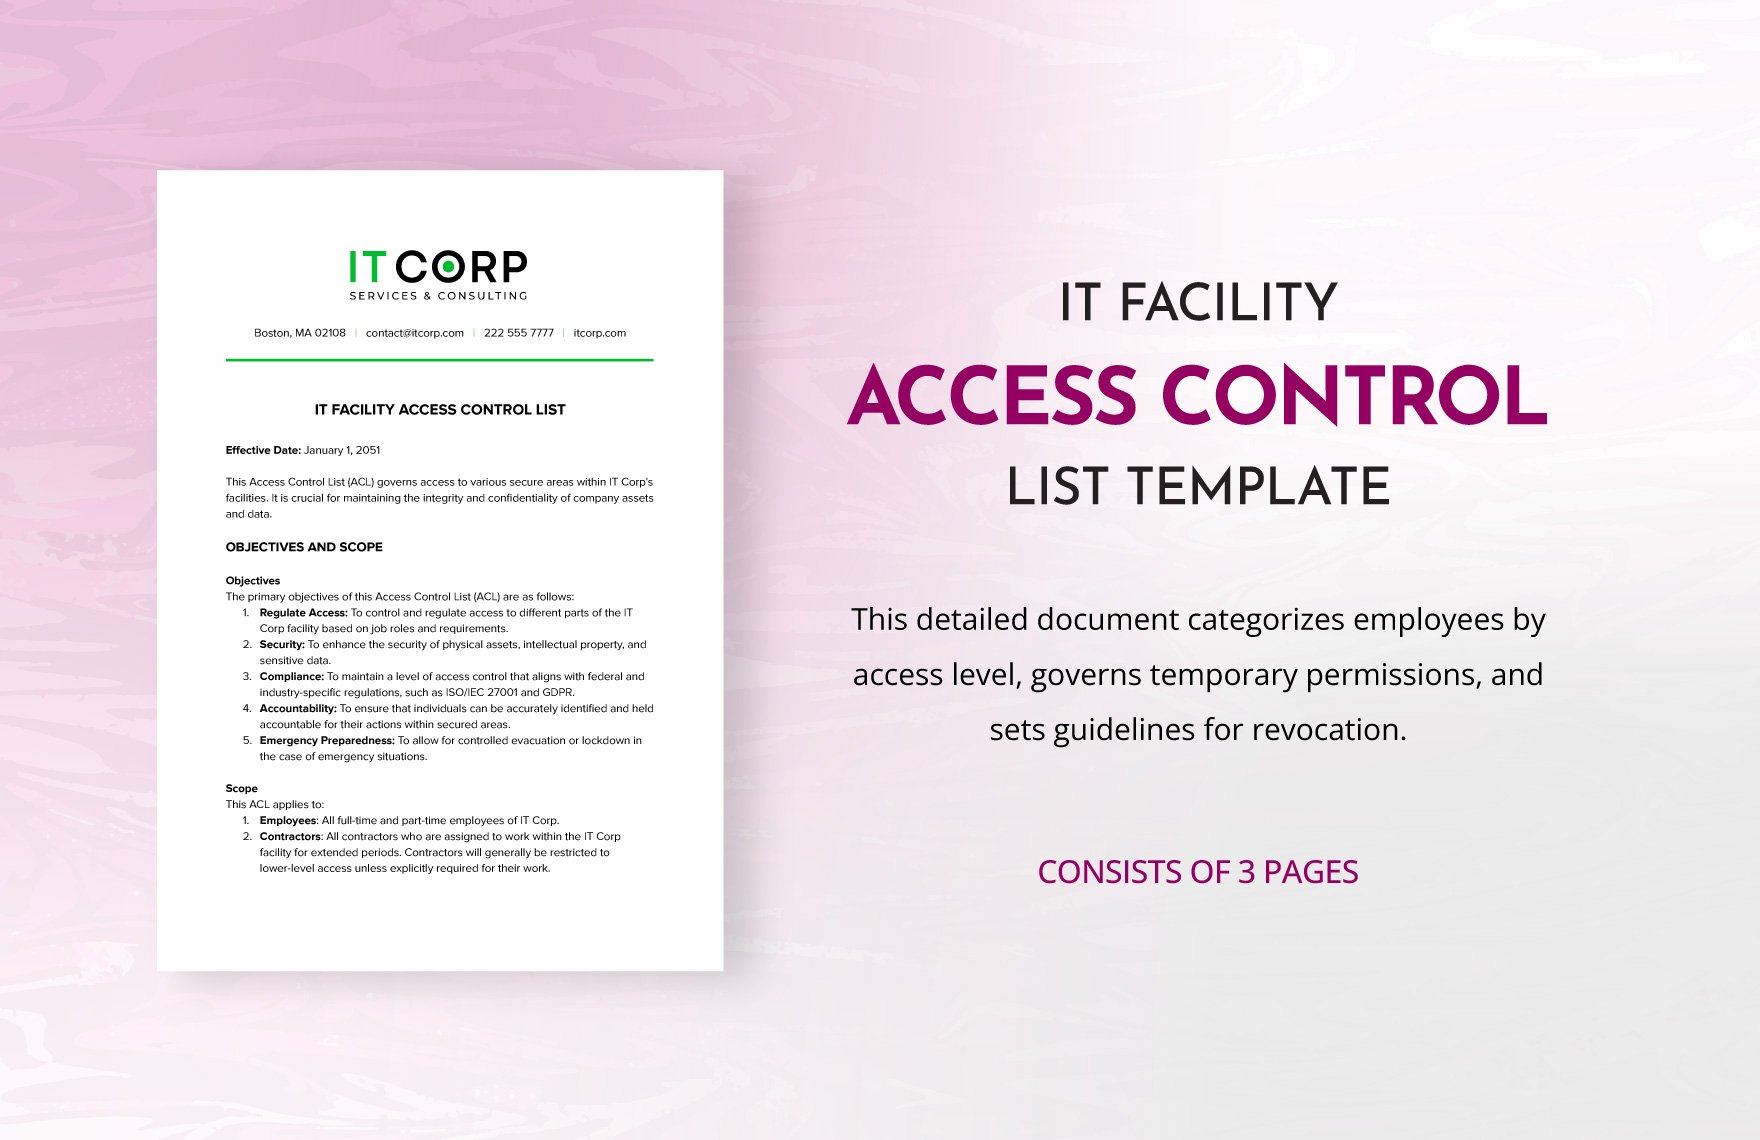 IT Facility Access Control List Template